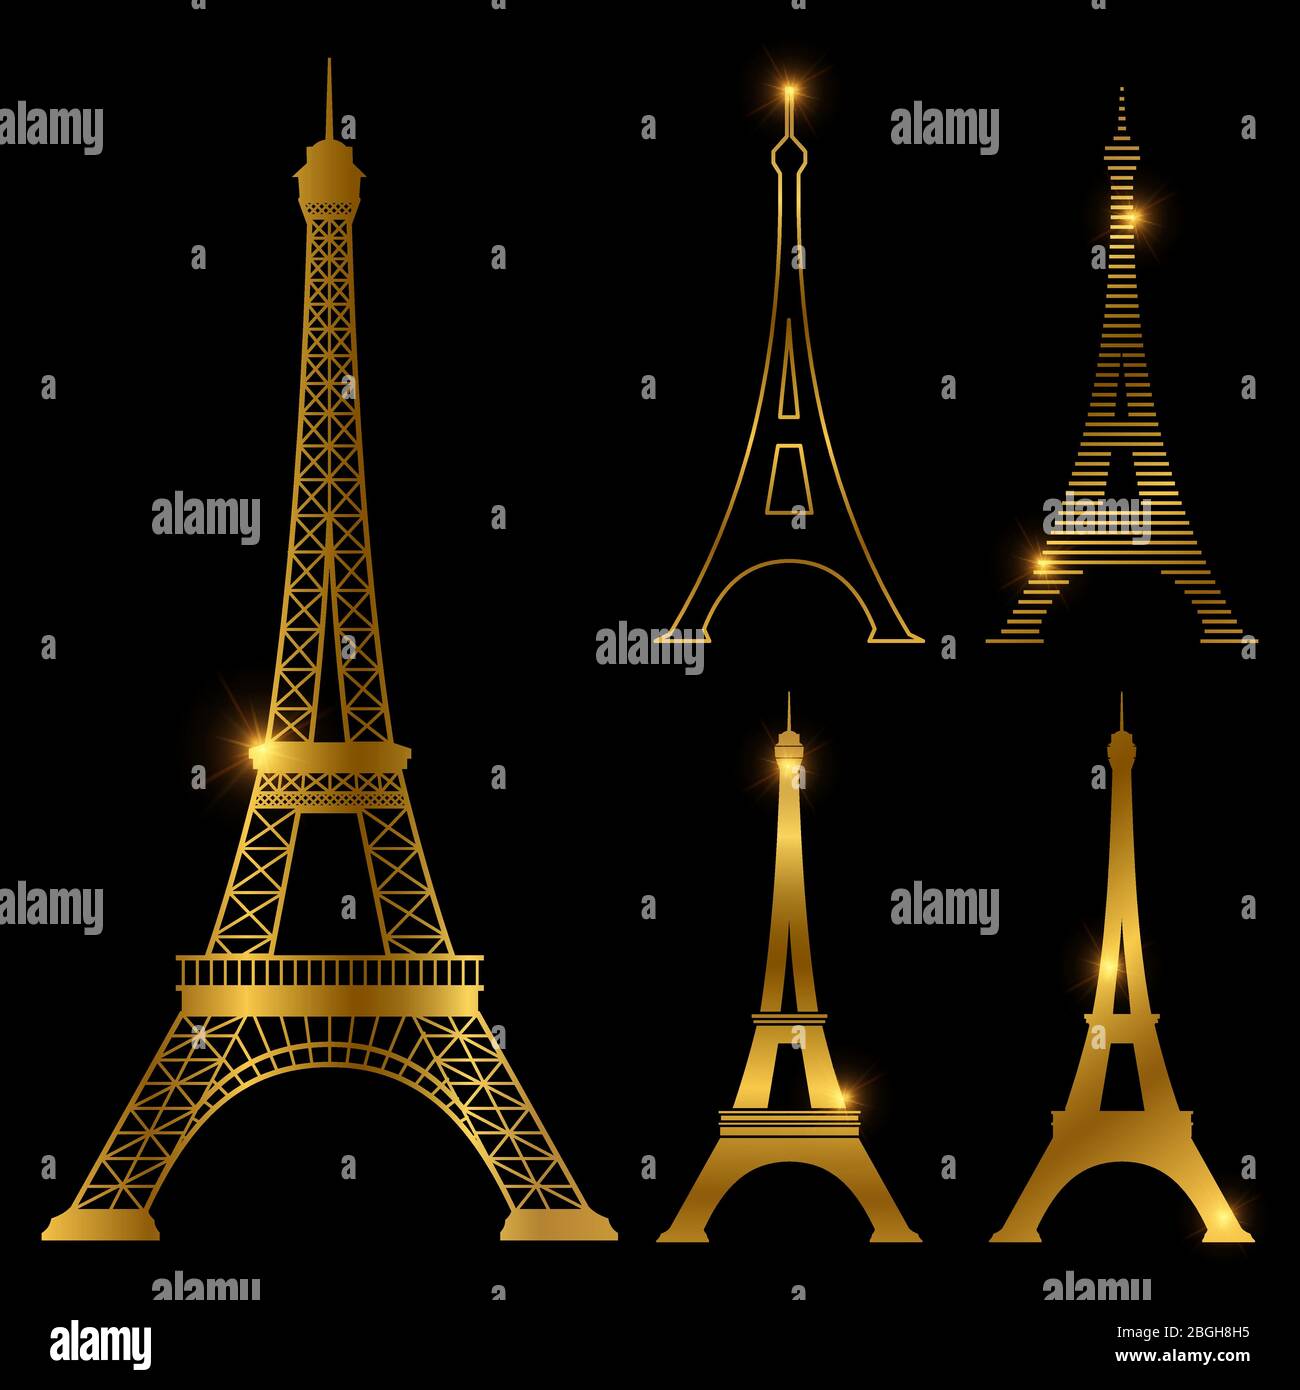 Different golden eiffel tower vector landmark set. Paris symbol icons. France symbol monument in gold style illustration Stock Vector